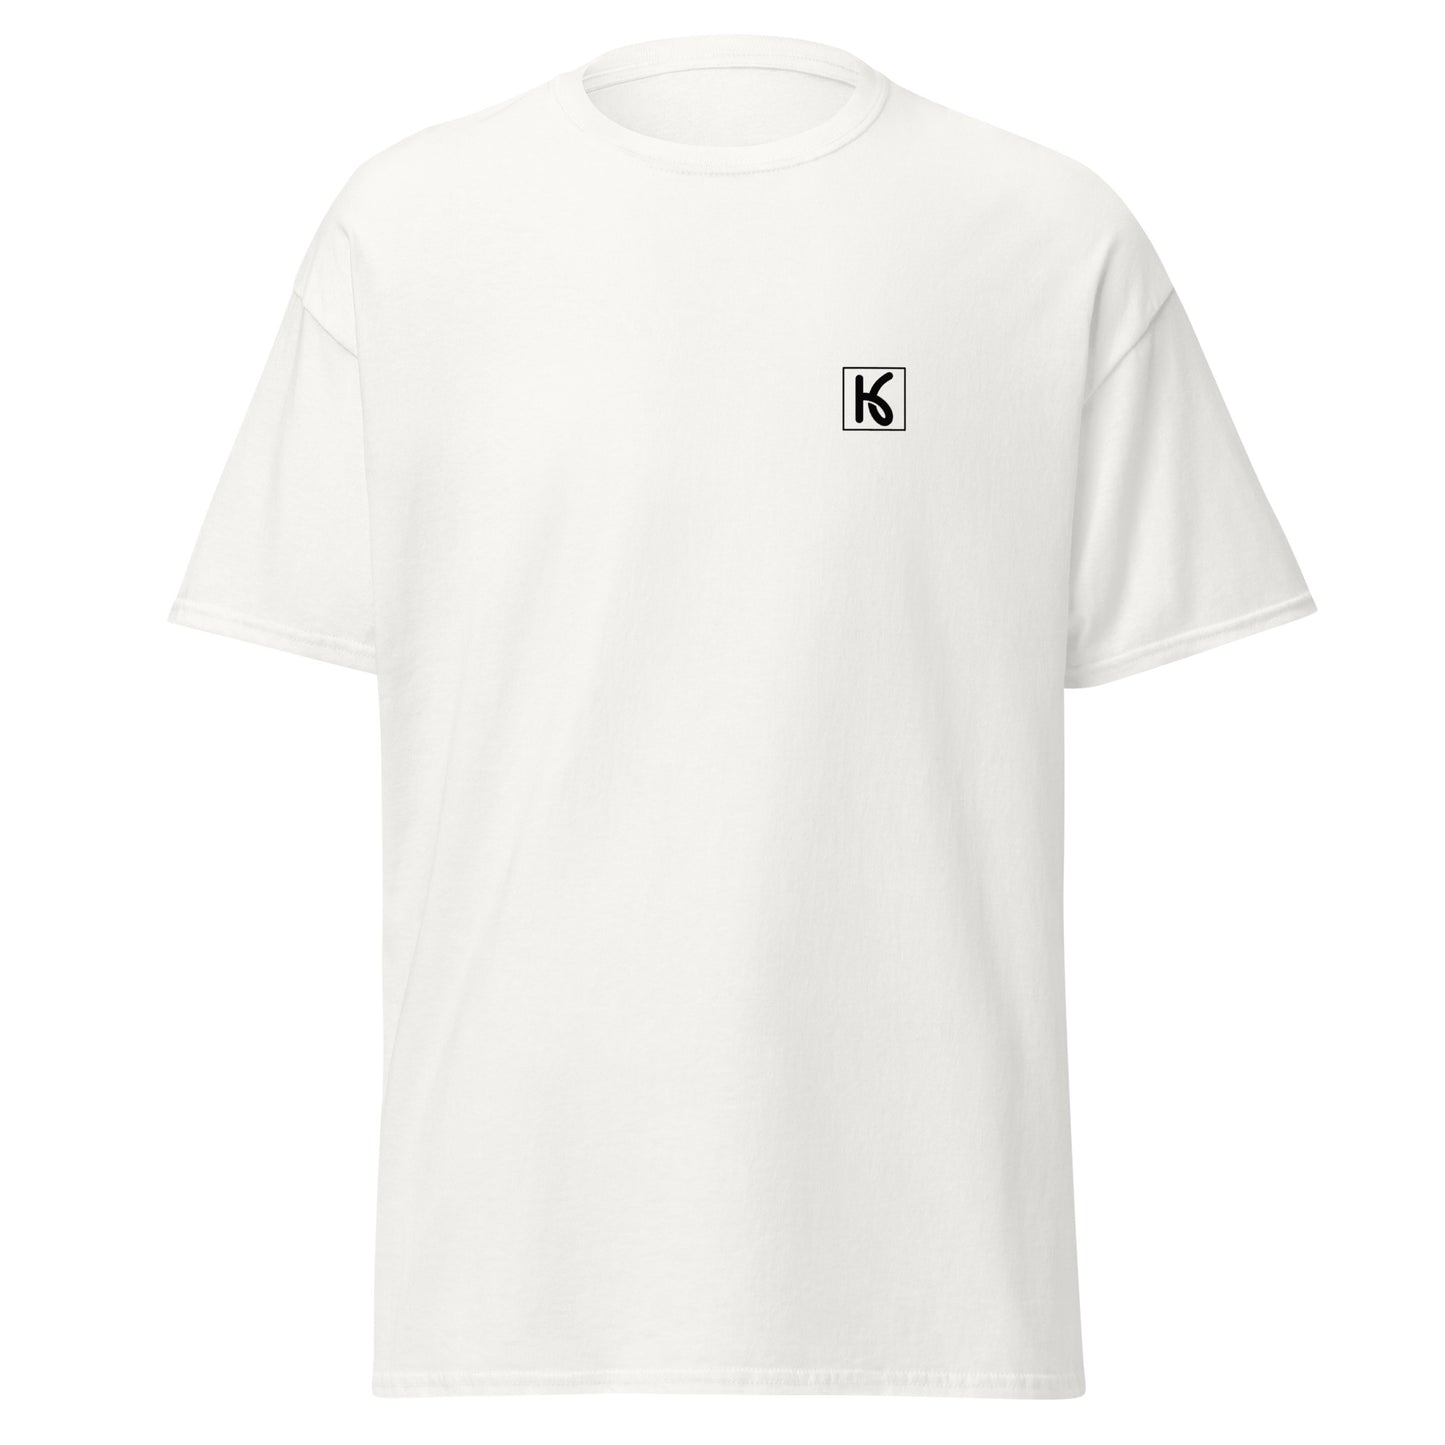 Camiseta clásica hombre Blanca (Kiyo)